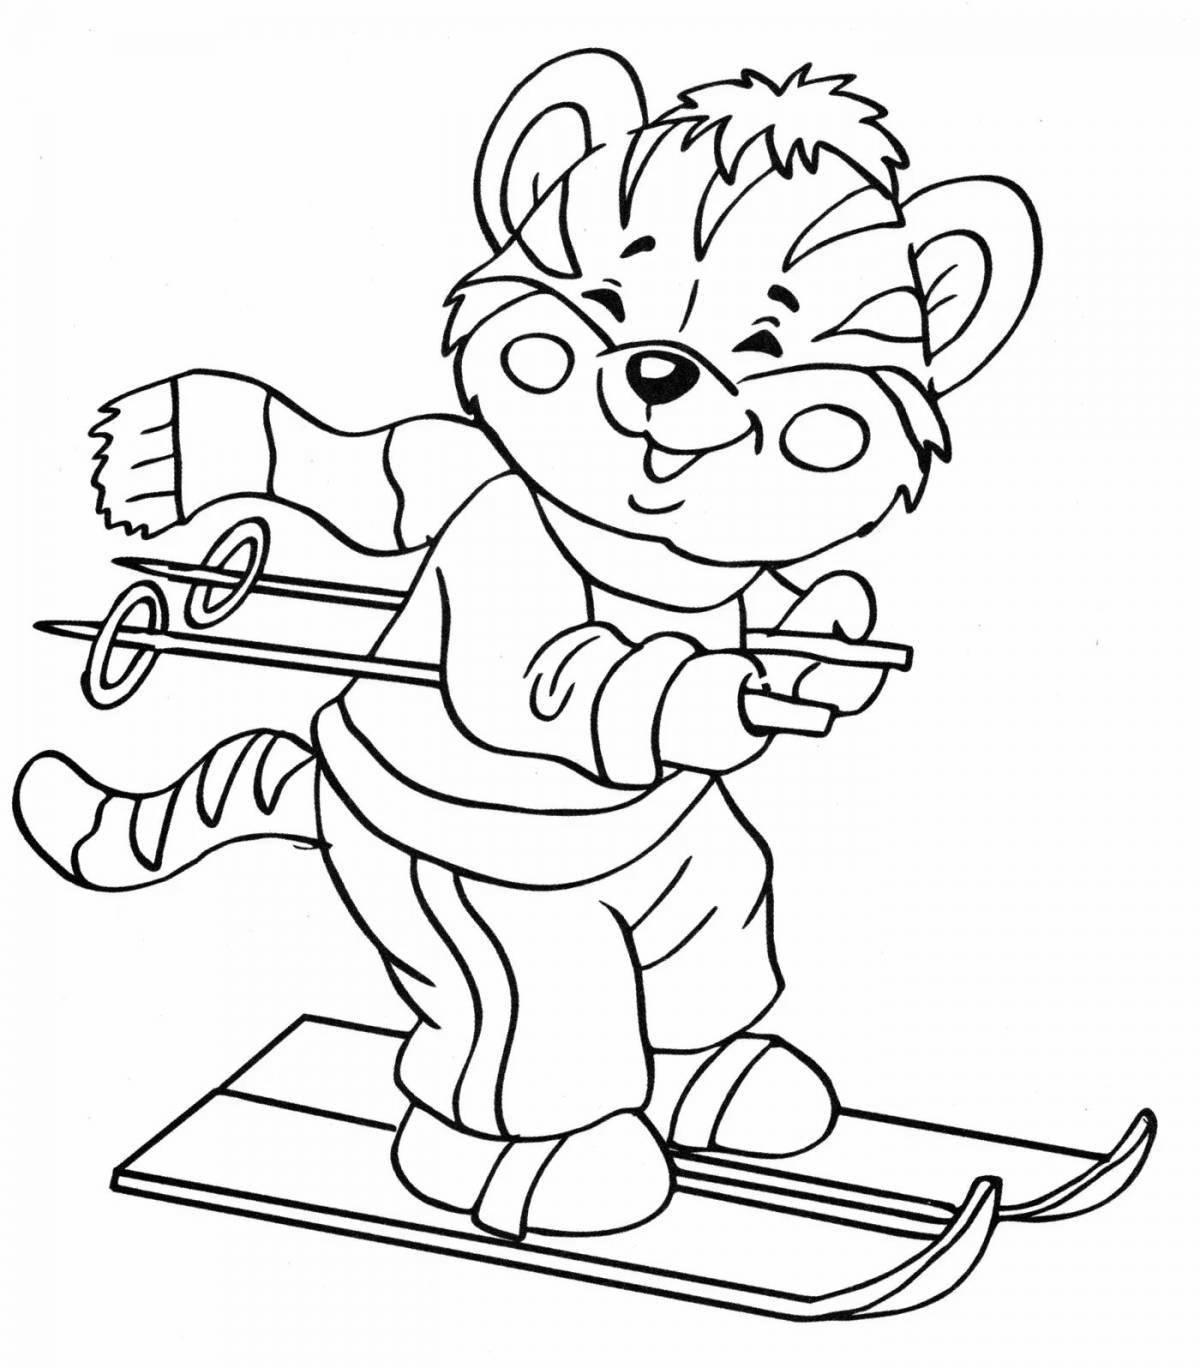 Coloring book magic bear on skis